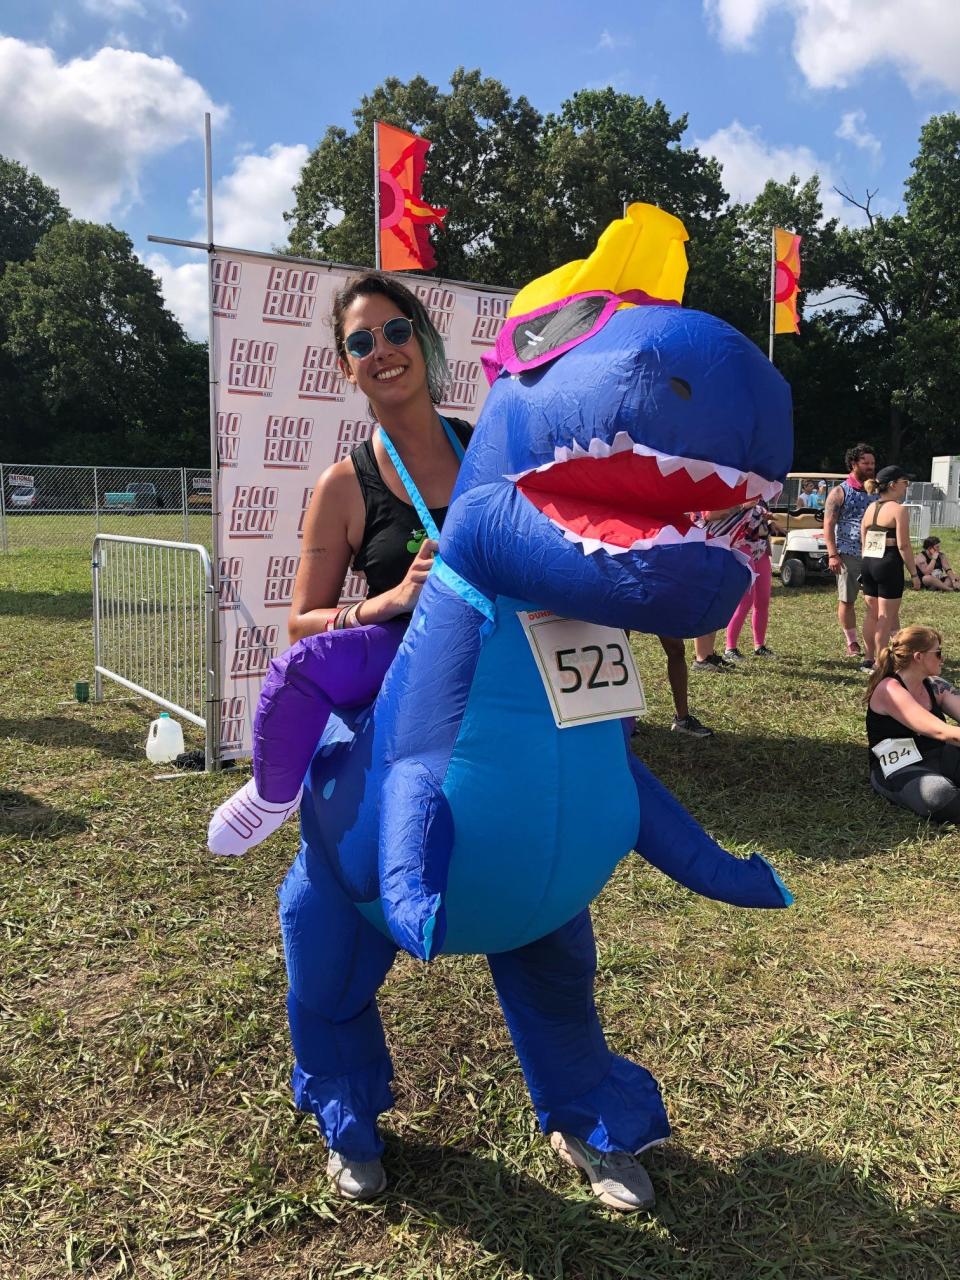 Cristina Garza ran the entire 5K while riding an inflatable dinosaur.